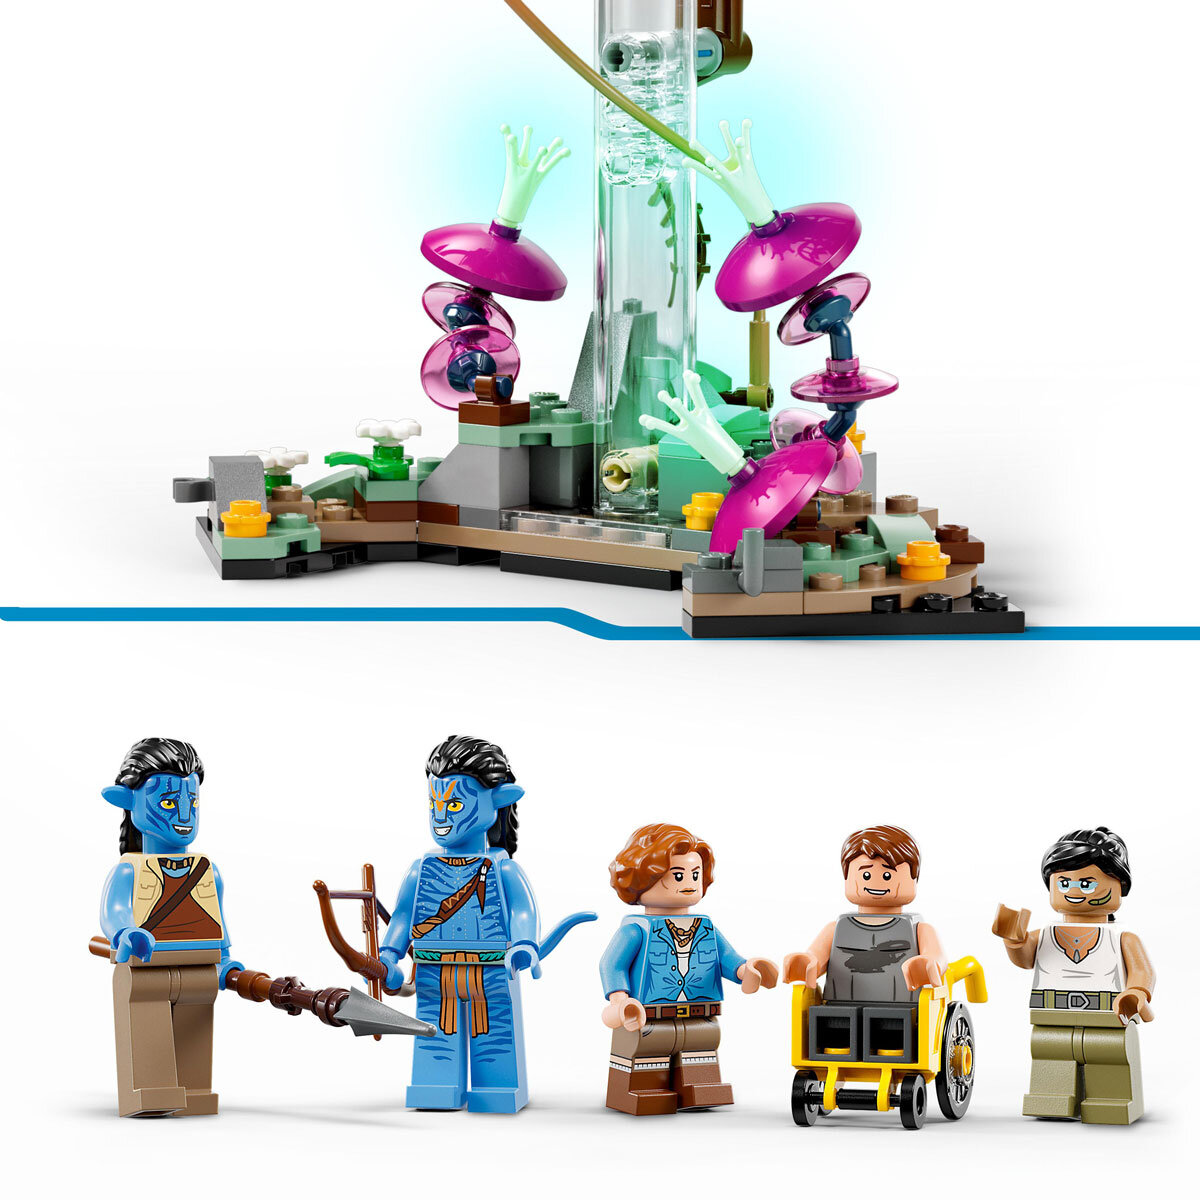 LEGO Avatar Floating Mountains: Site 26 & RDA Samson - Model 75573 (9+ Years)